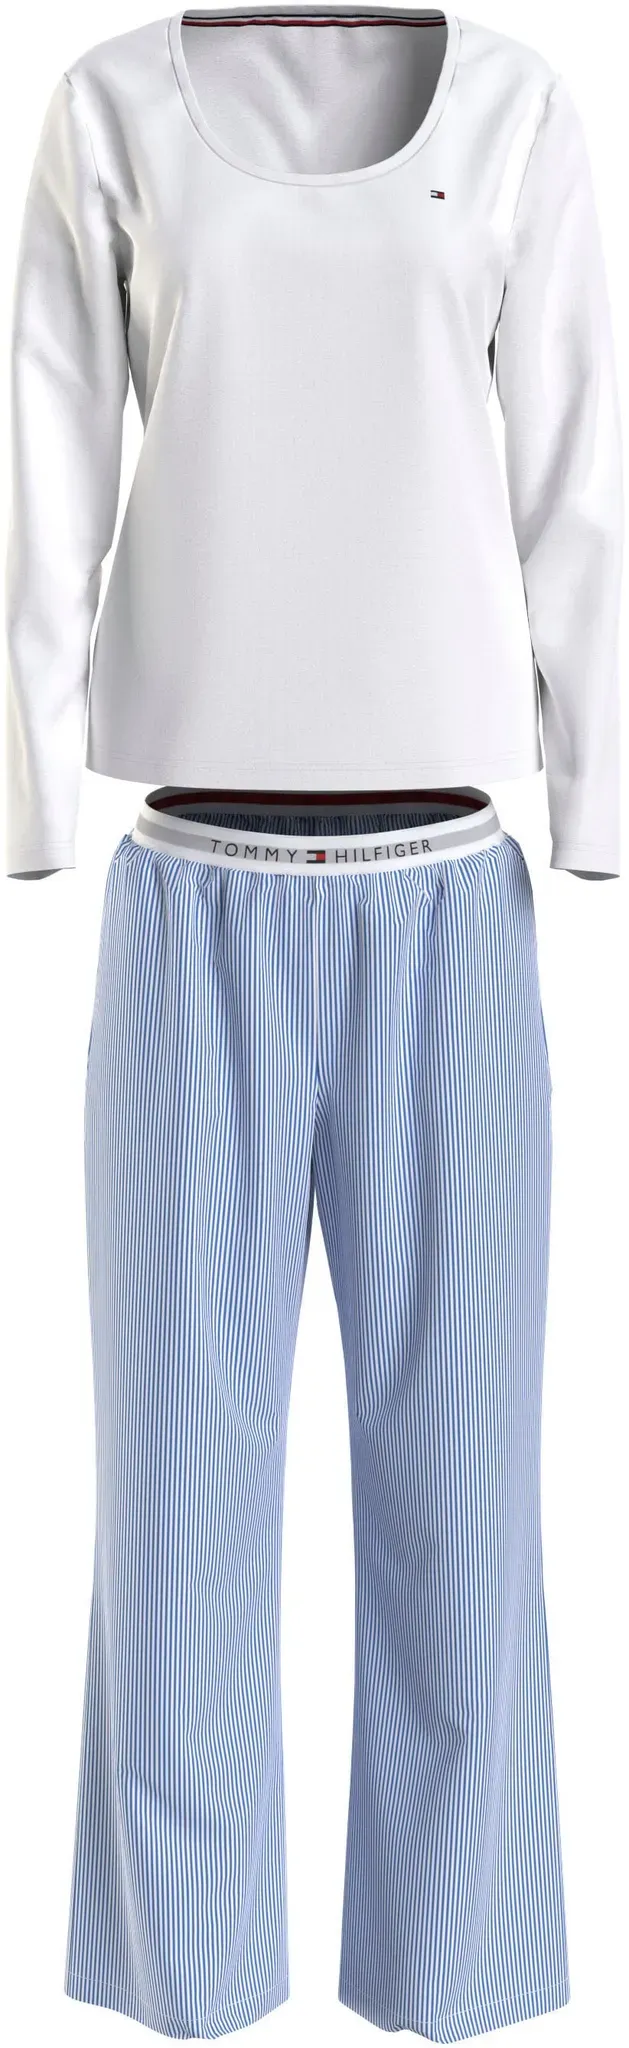 Pyjama TOMMY HILFIGER UNDERWEAR "TH LS PJ SET WOVEN" Gr. L (40), blau (white, ithaca stripe blue spell) Damen Homewear-Sets Pyjamas Shirt uni, Hose gestreift